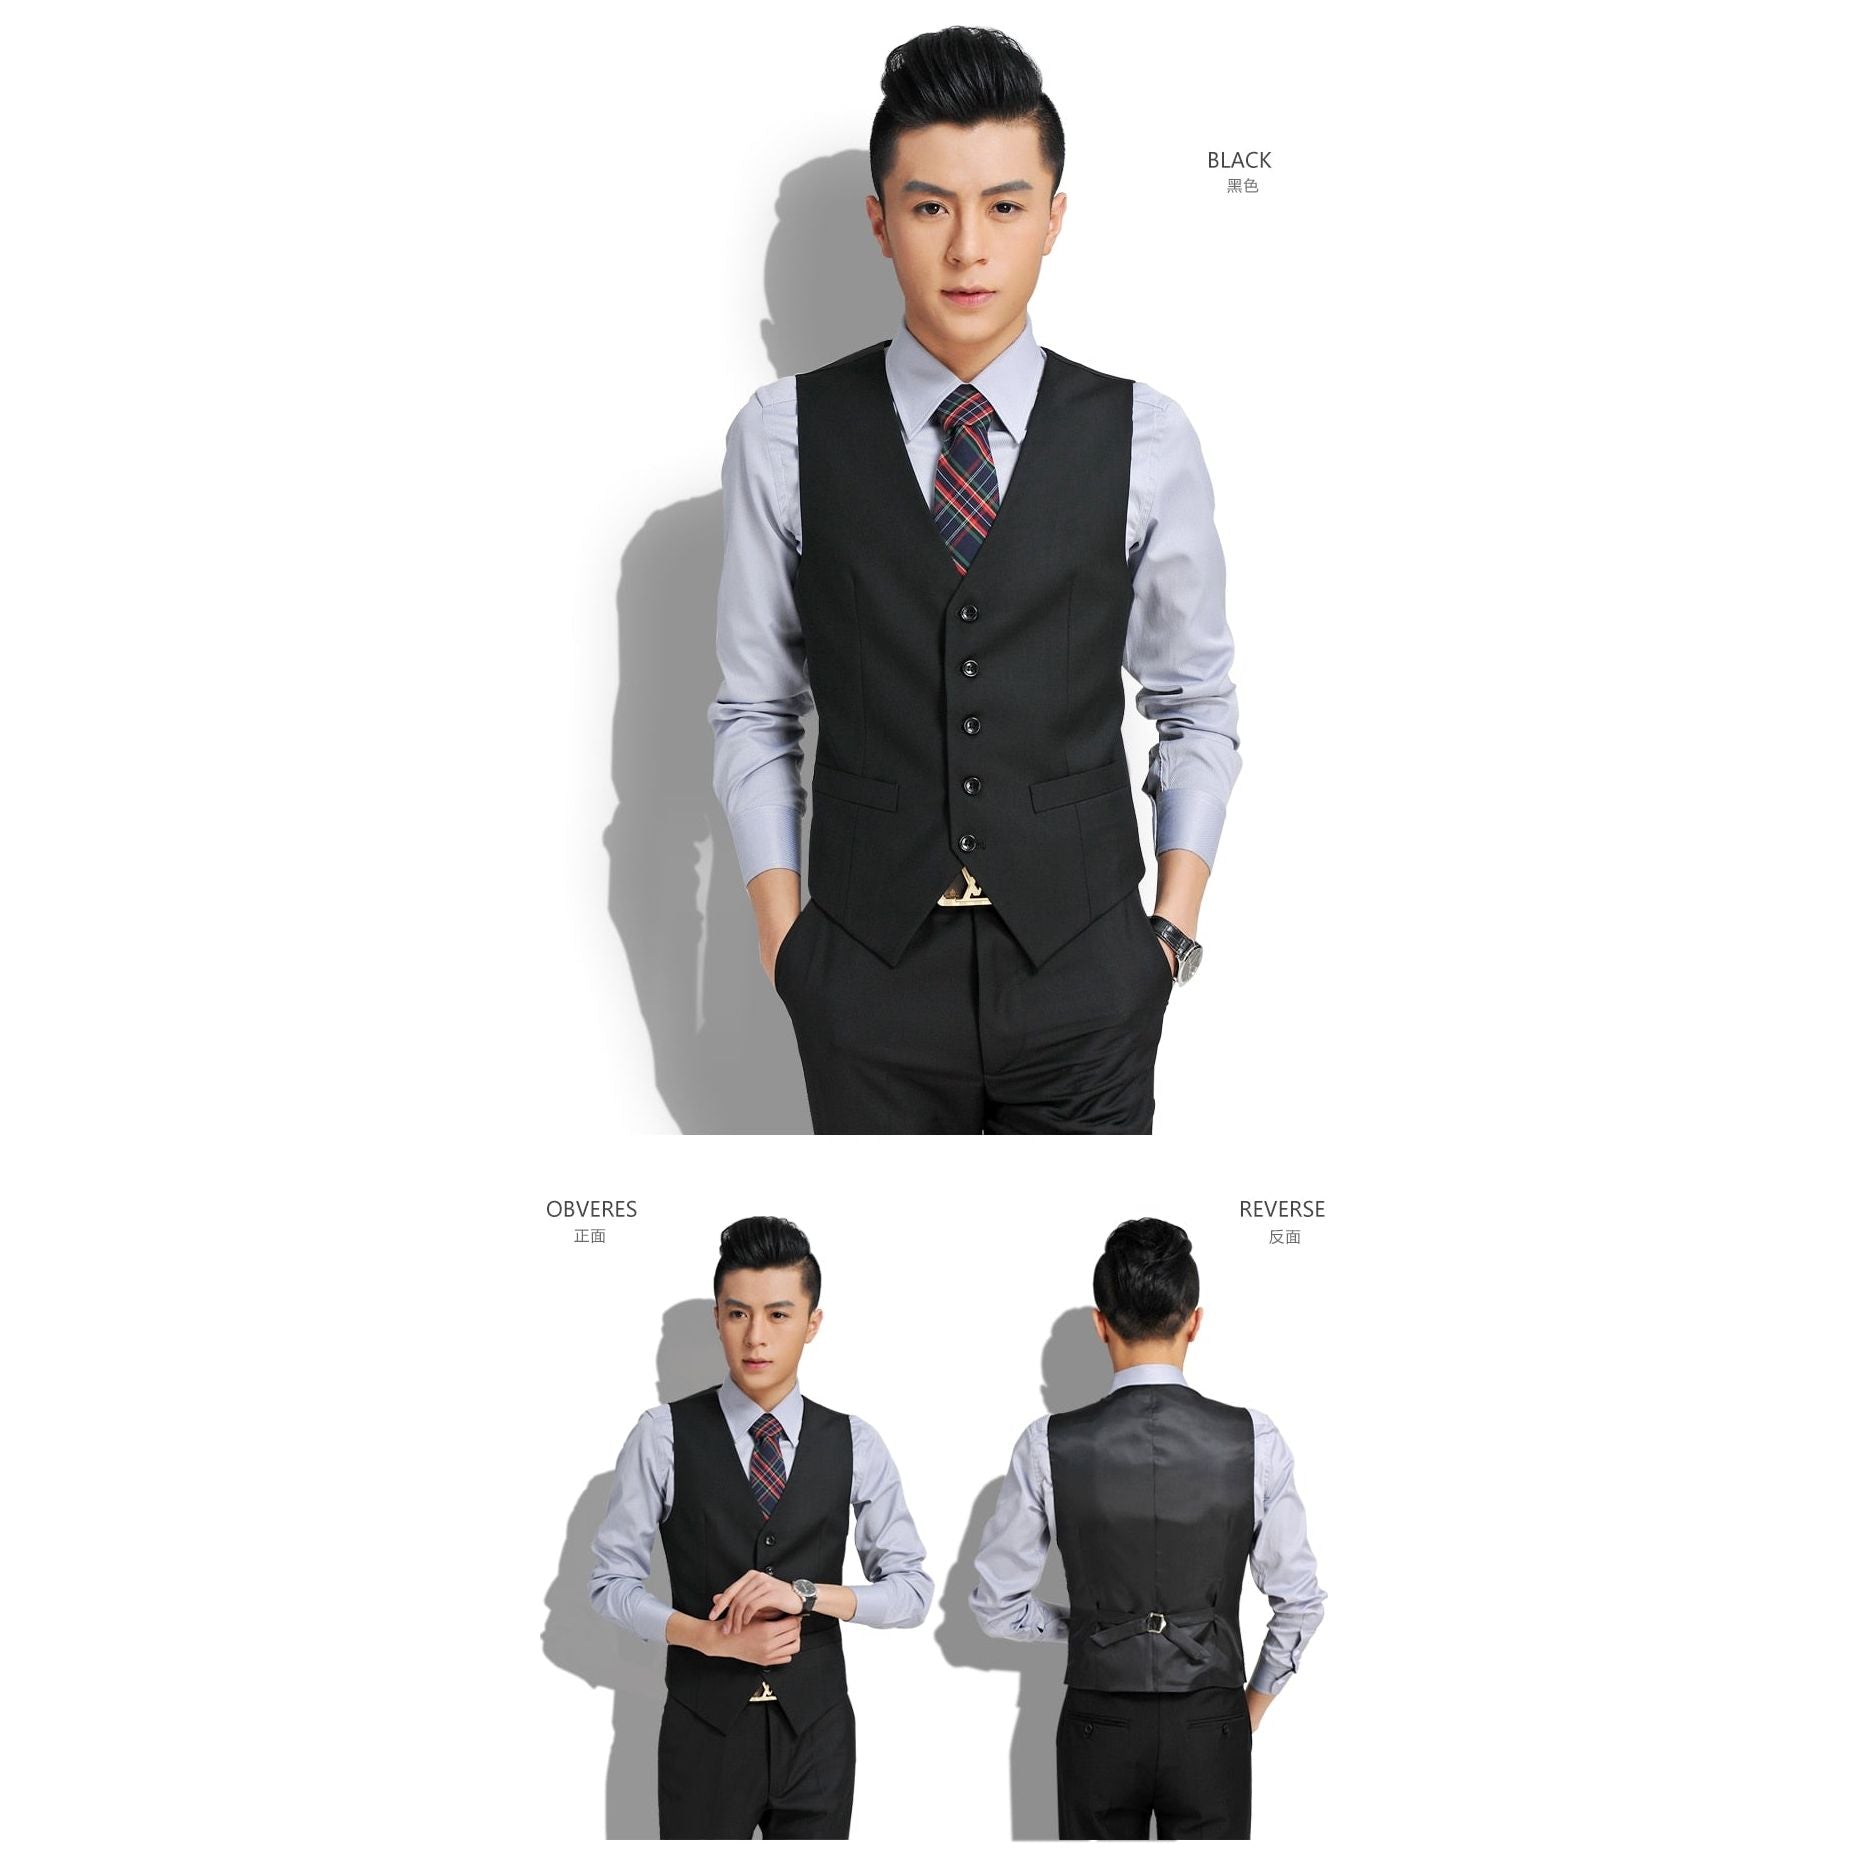 New Men's Fashion Solid Color Suit Vest Black Gray Formal Business - Frimunt Clothing Co.